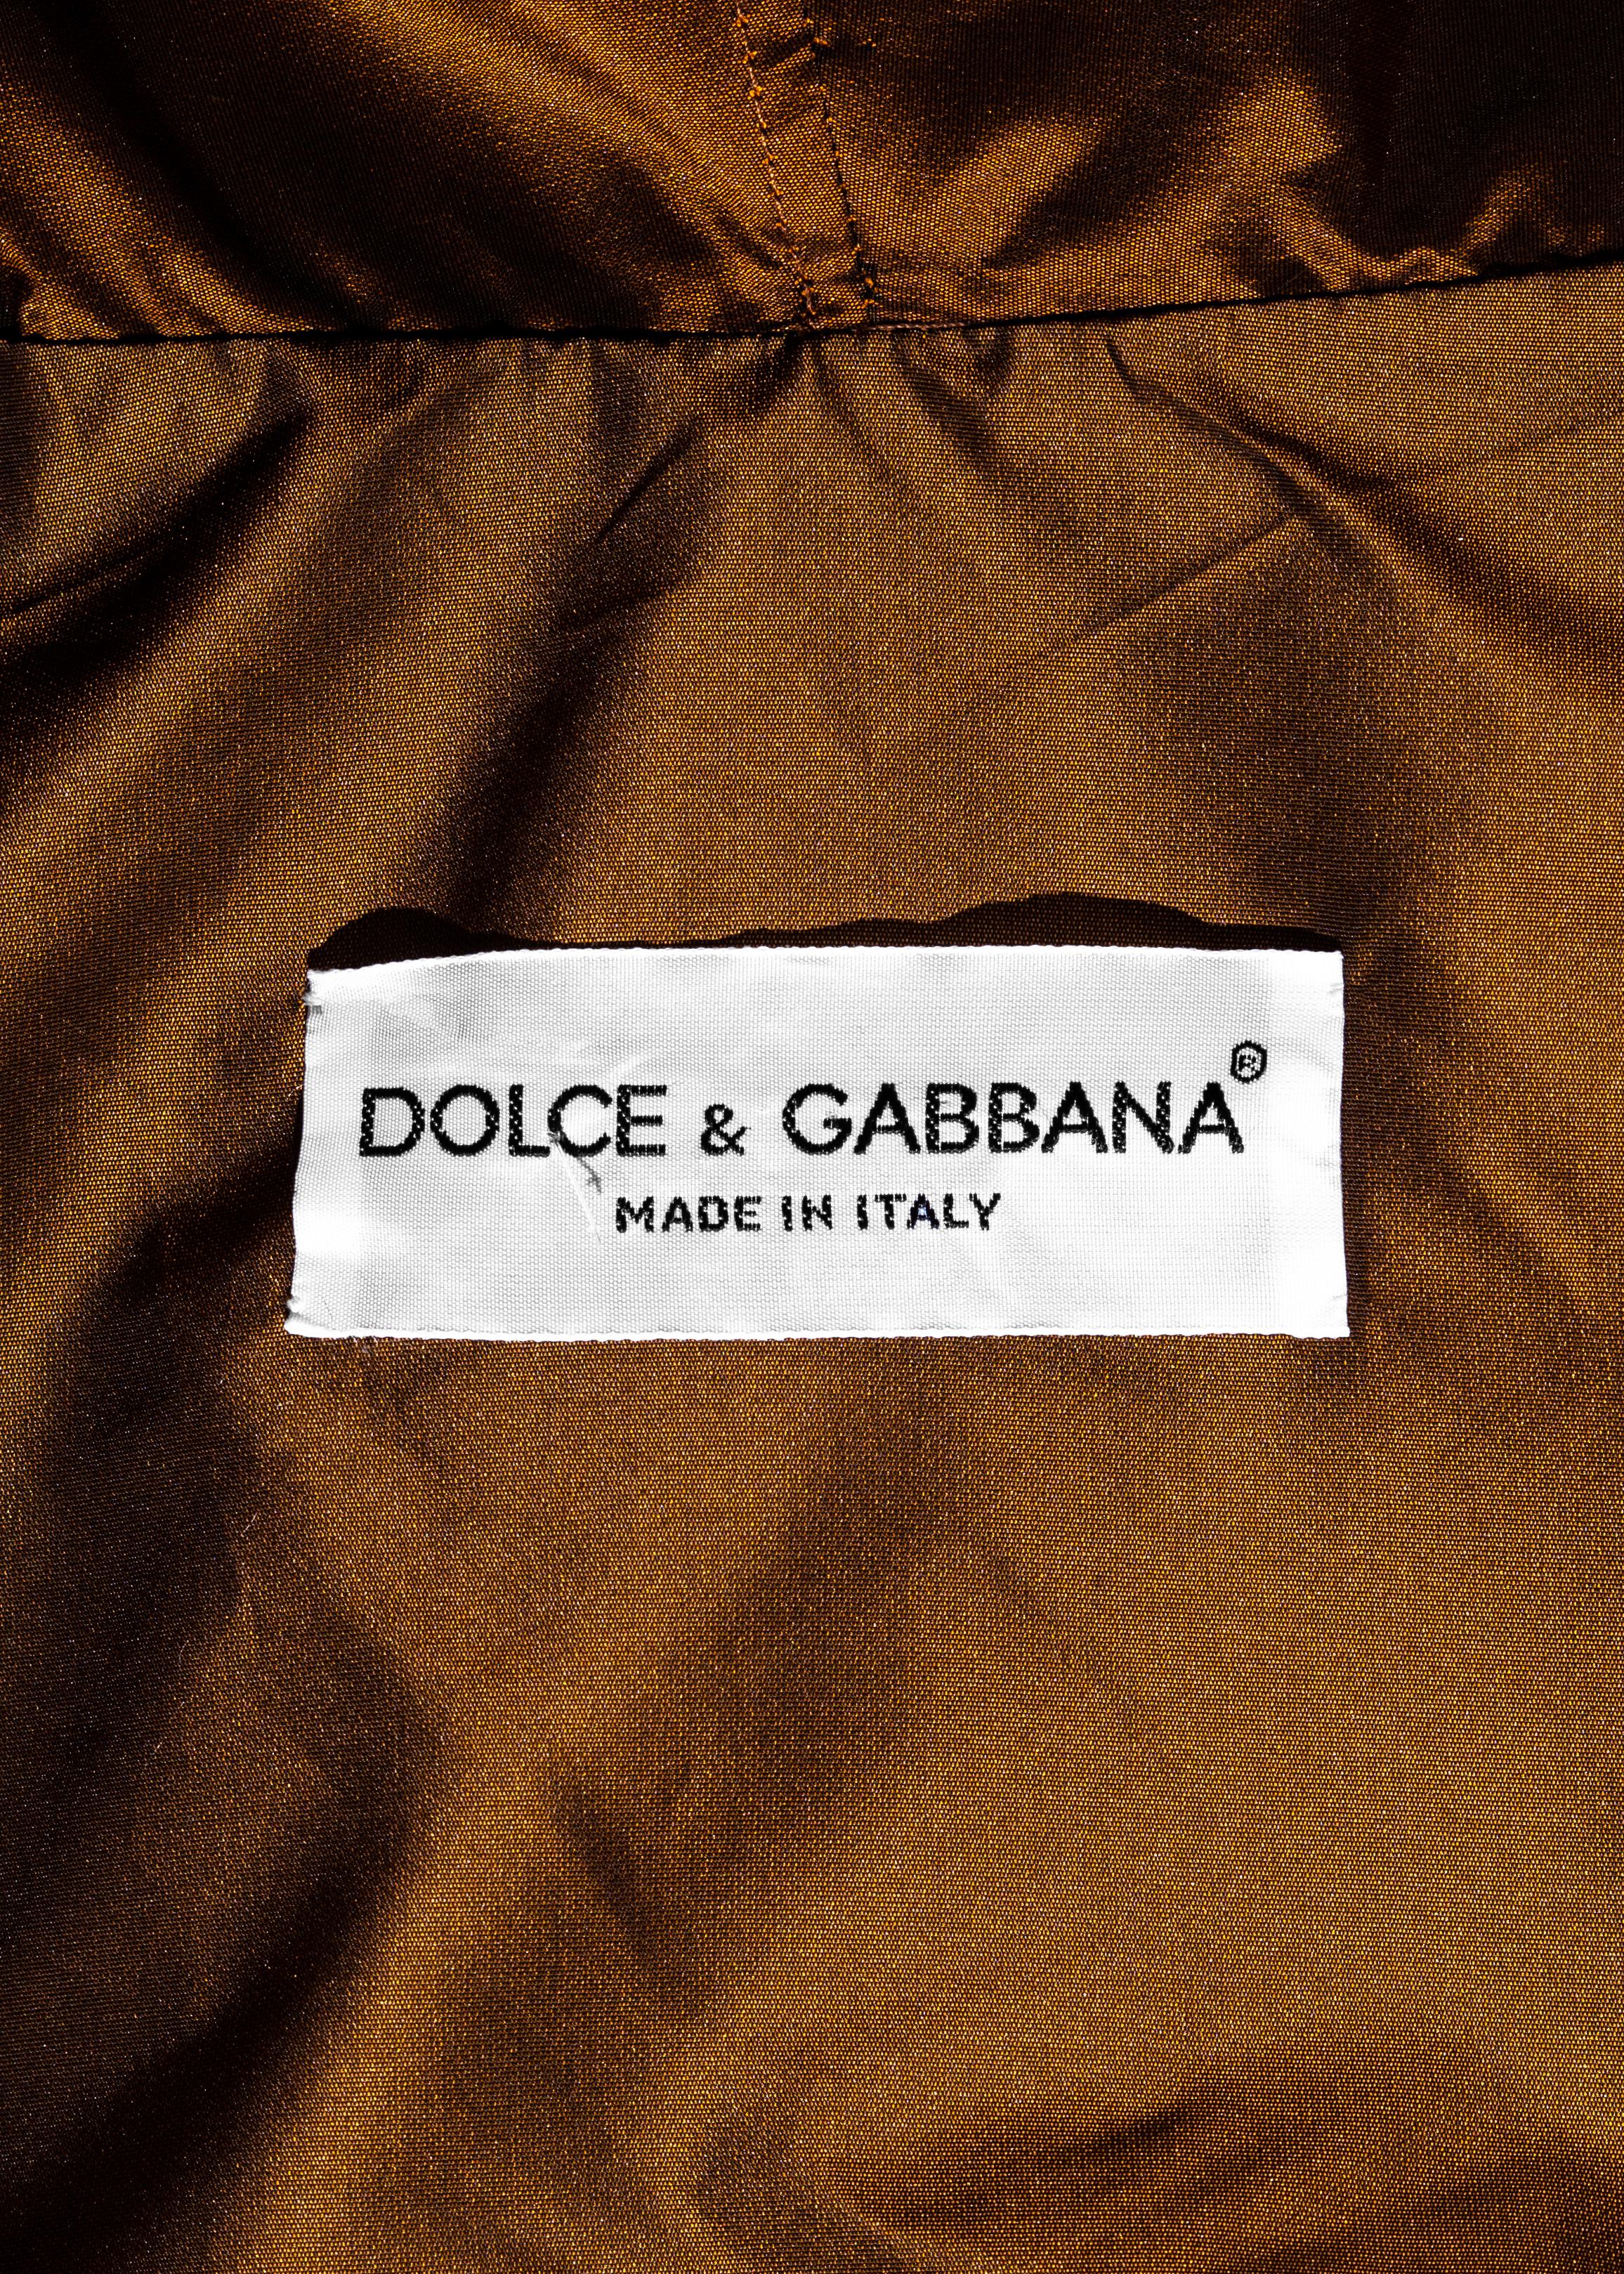 Dolce & Gabbana copper taffeta evening coat dress, fw 1991 4